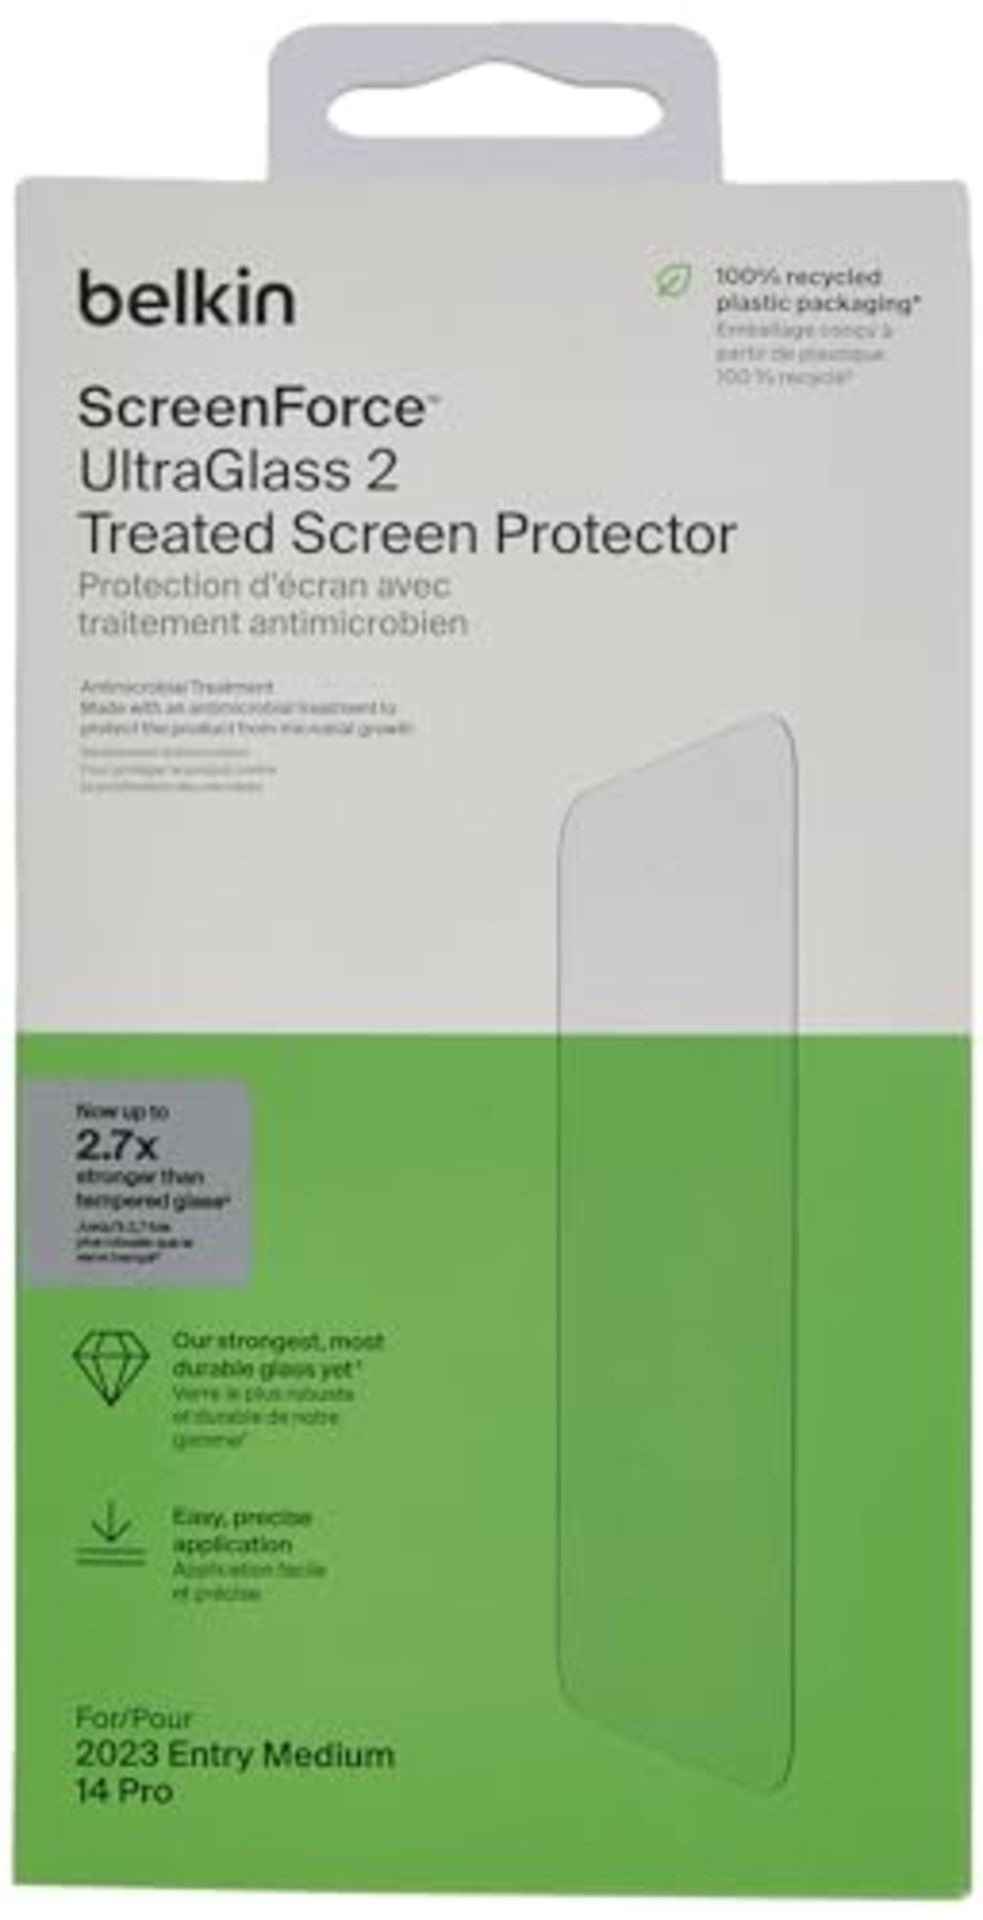 Belkin ScreenForce UltraGlass 2 iPhone 14 Pro Screen Protector, Scratch-Resistant, 9H